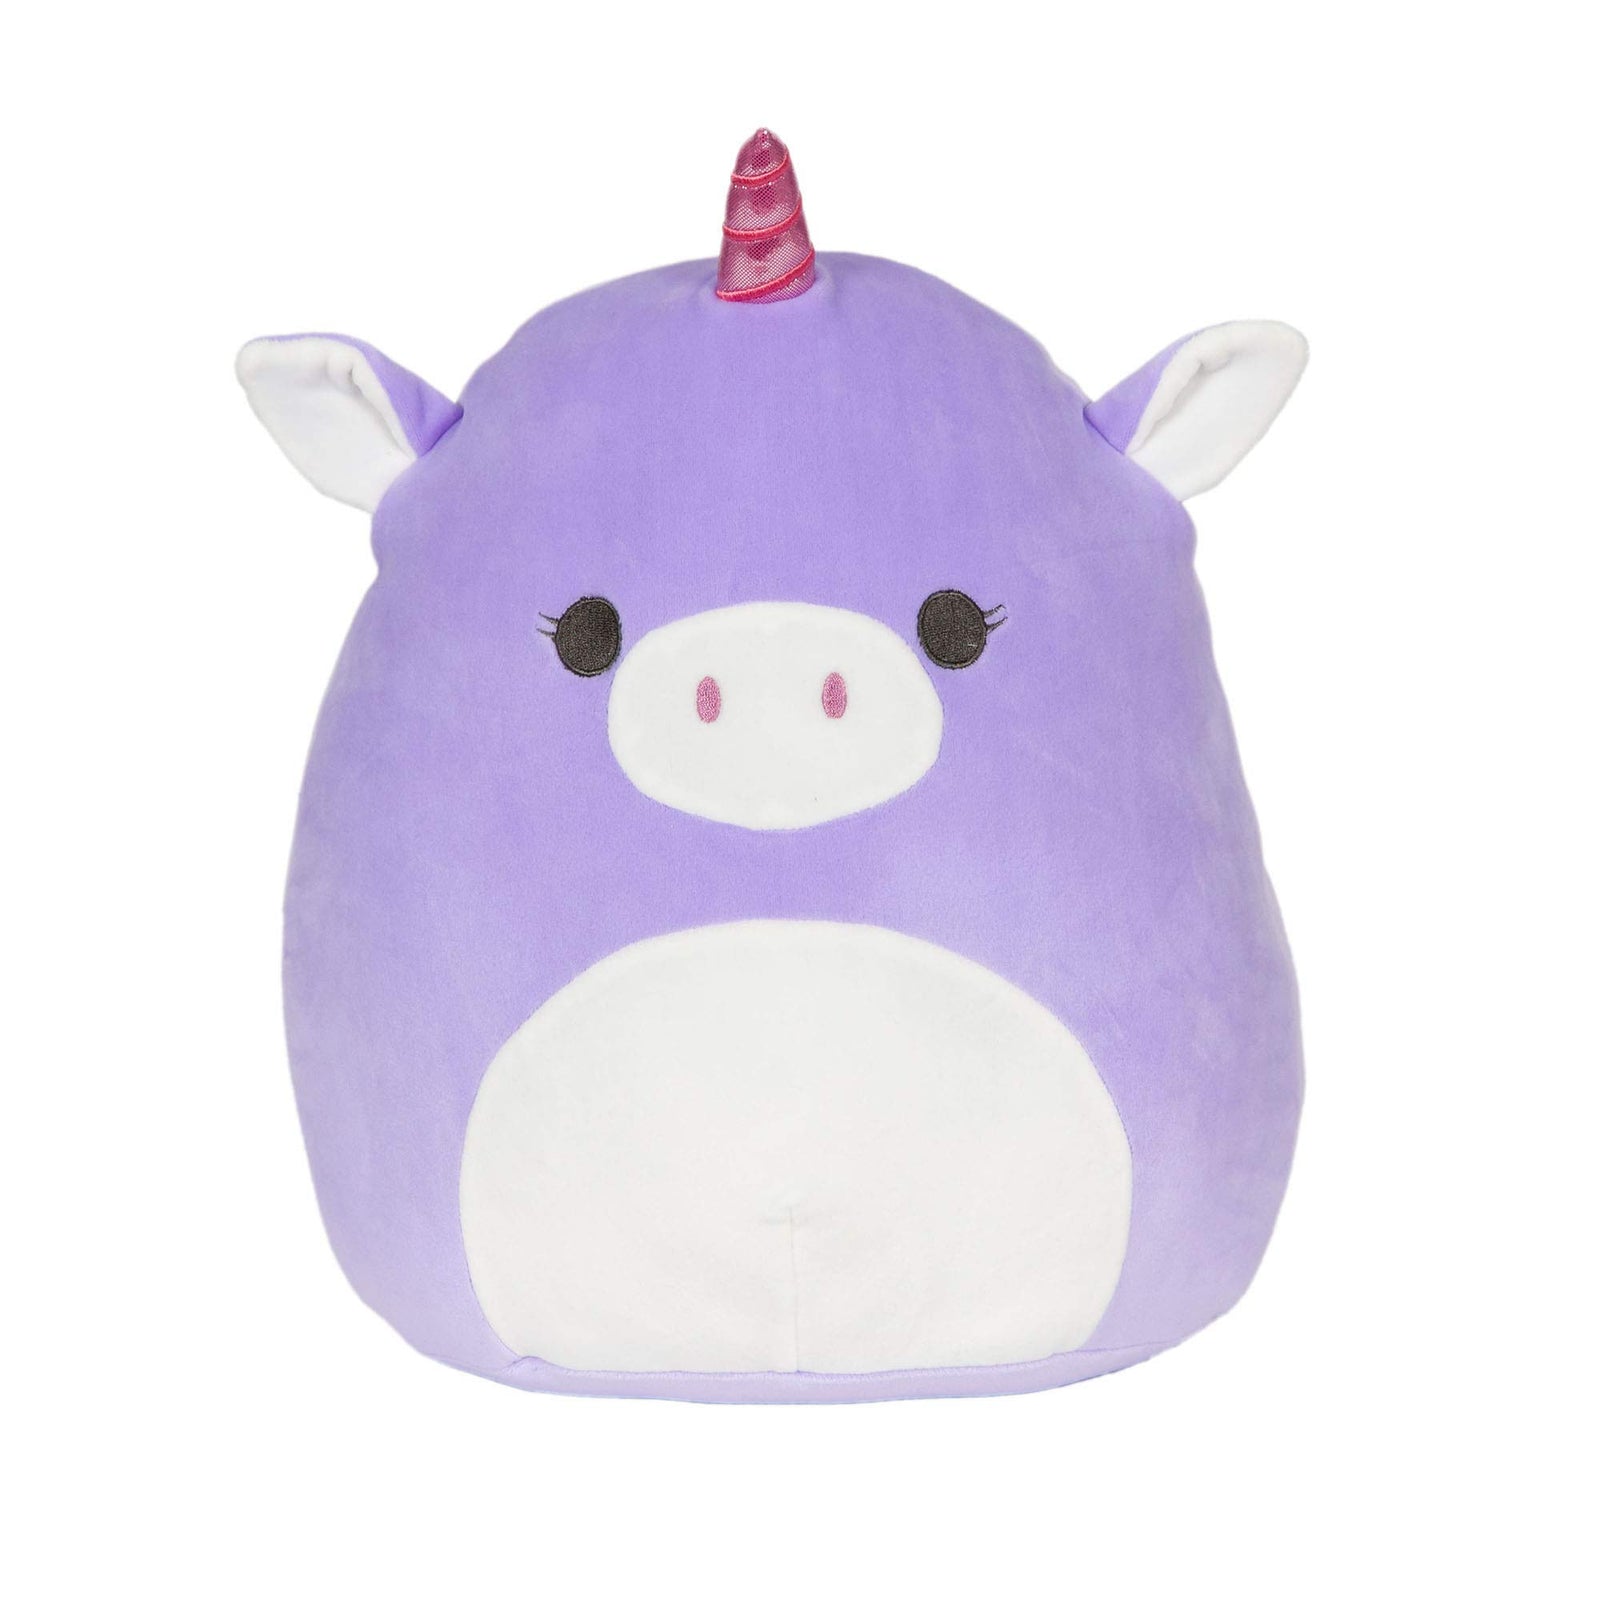 Squishmallow Official Kellytoy Plush 12" Mia The Baby Unicorn- Ultrasoft Stuffed Animal Plush Toy